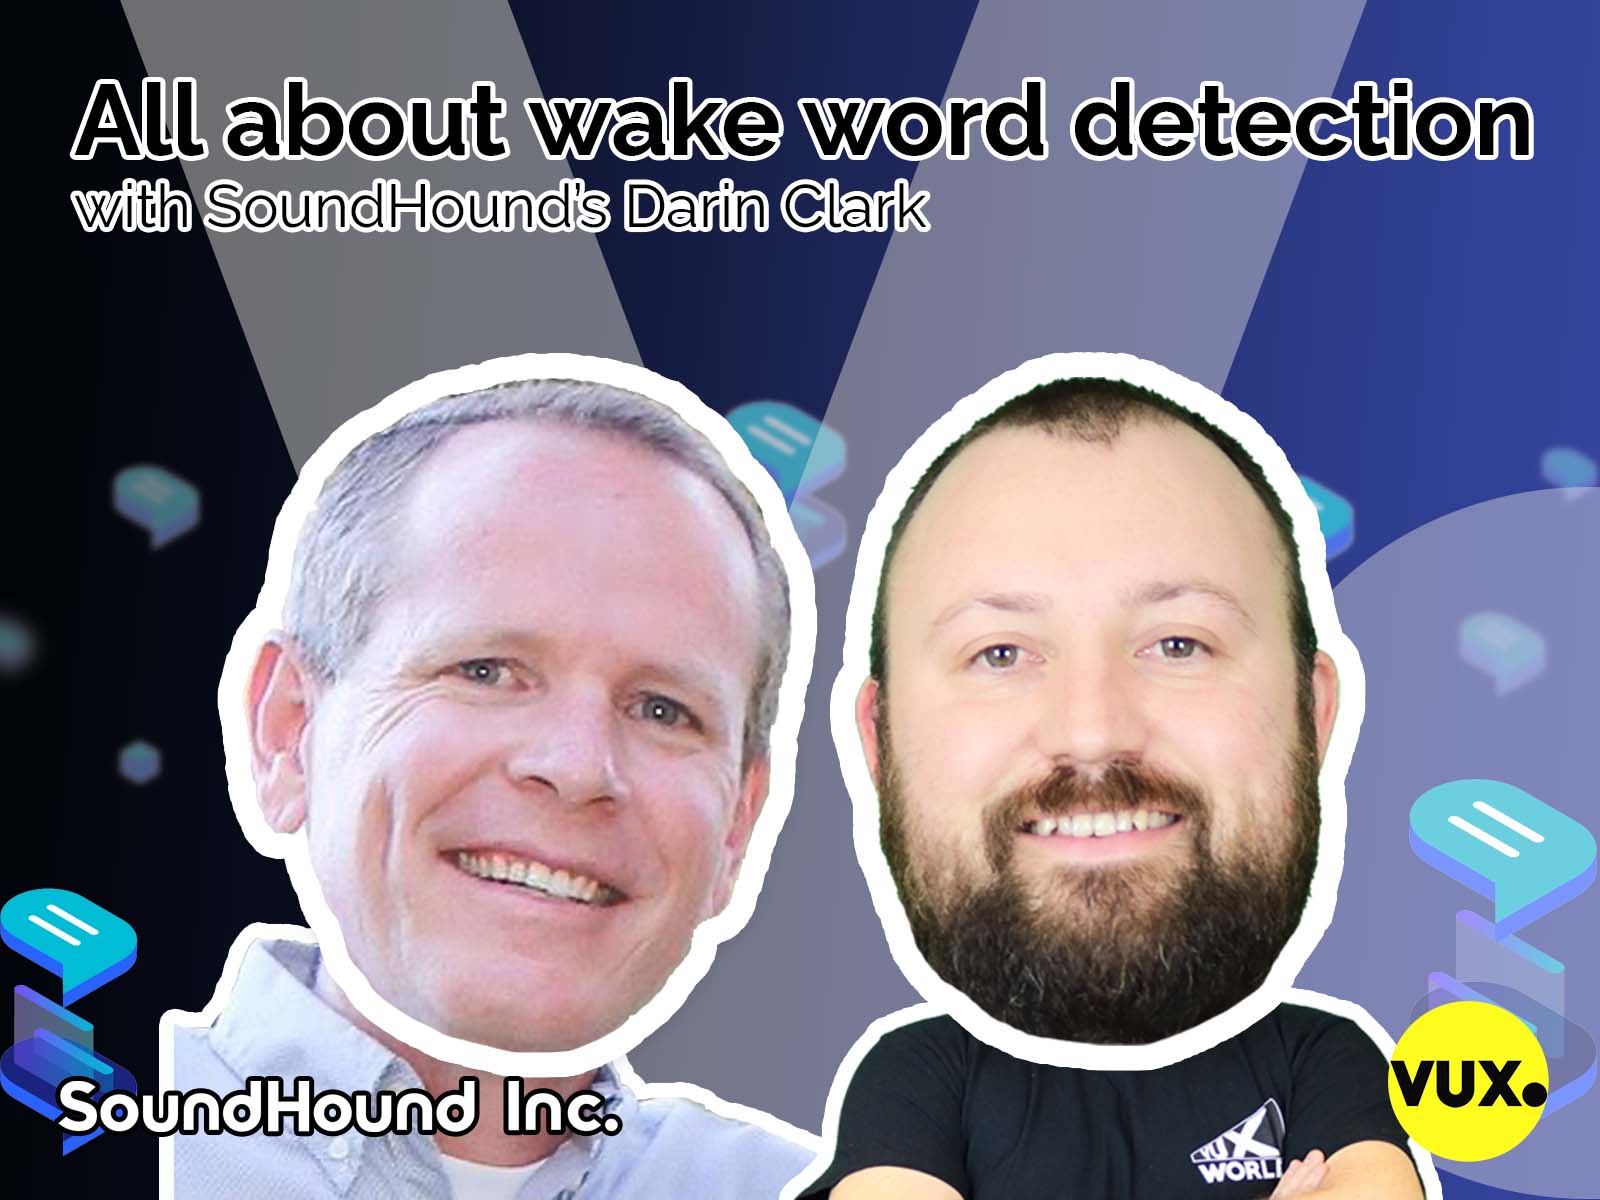 Darin Clark, SoundHound, on VUX World discussing wake word detection